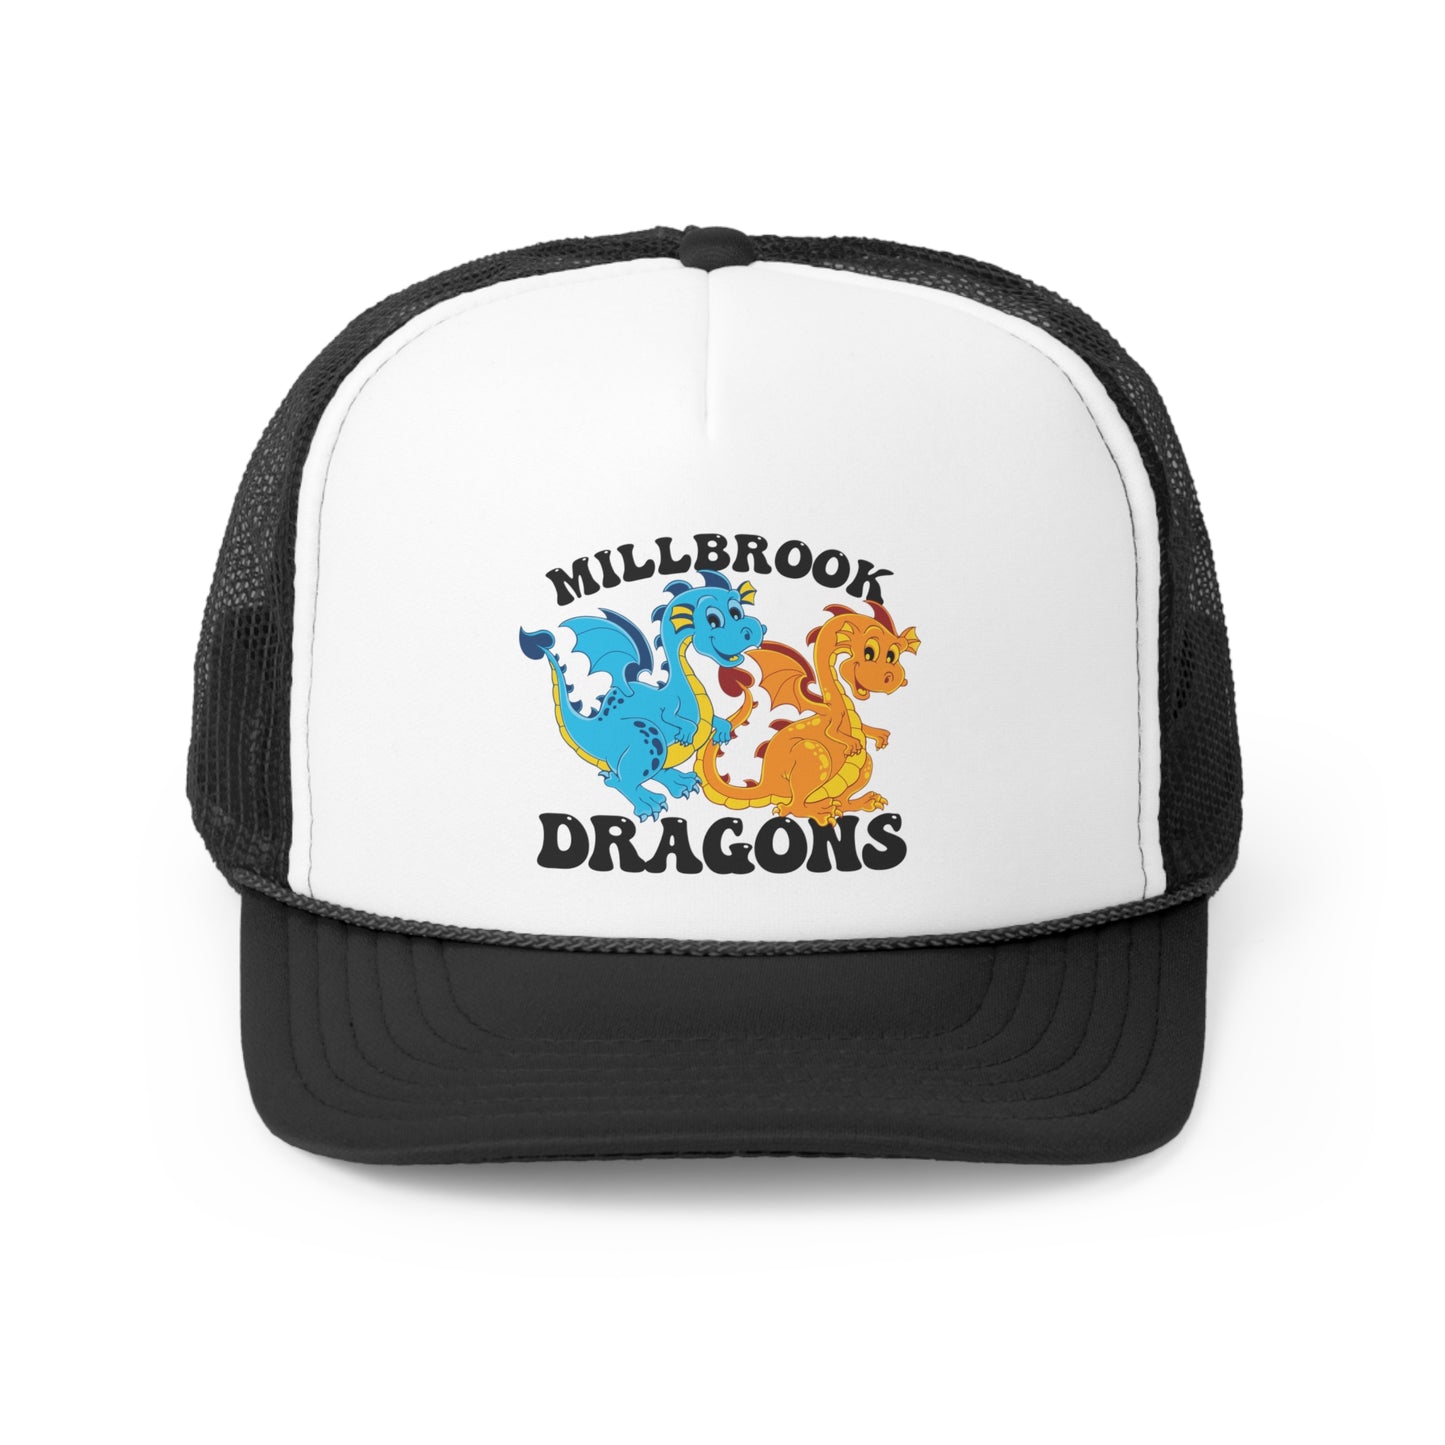 Millbrook Dragons Trucker Cap